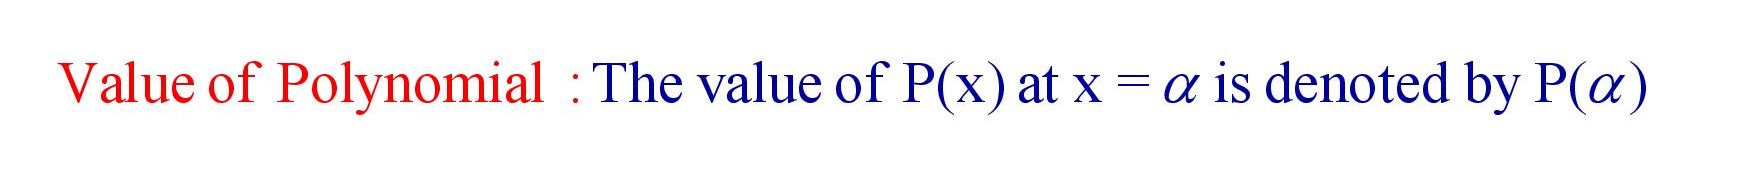 Value Polynomial